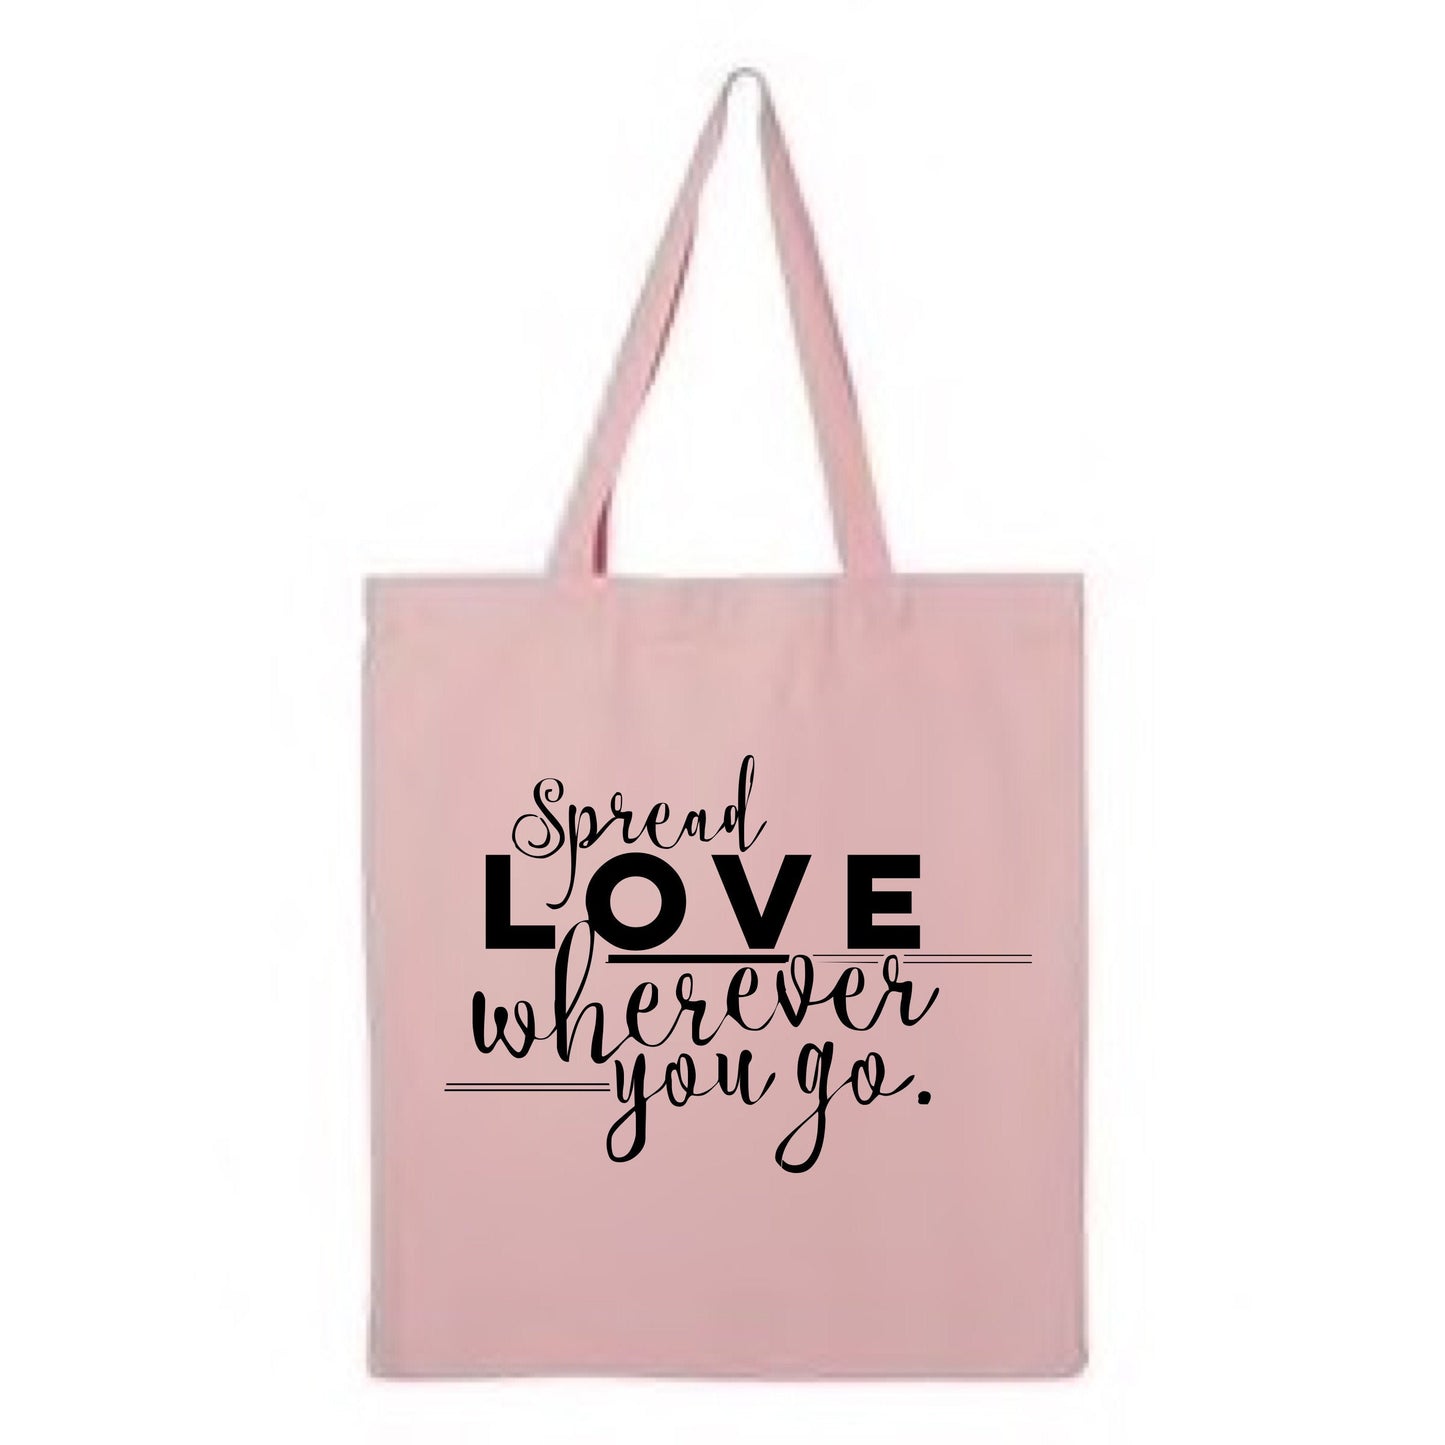 Reusable shopper bag| shopping bag| reusable shopper| cute reusable shopping bag| cloth shopping bag| reusable tote| tote bag| custom bag